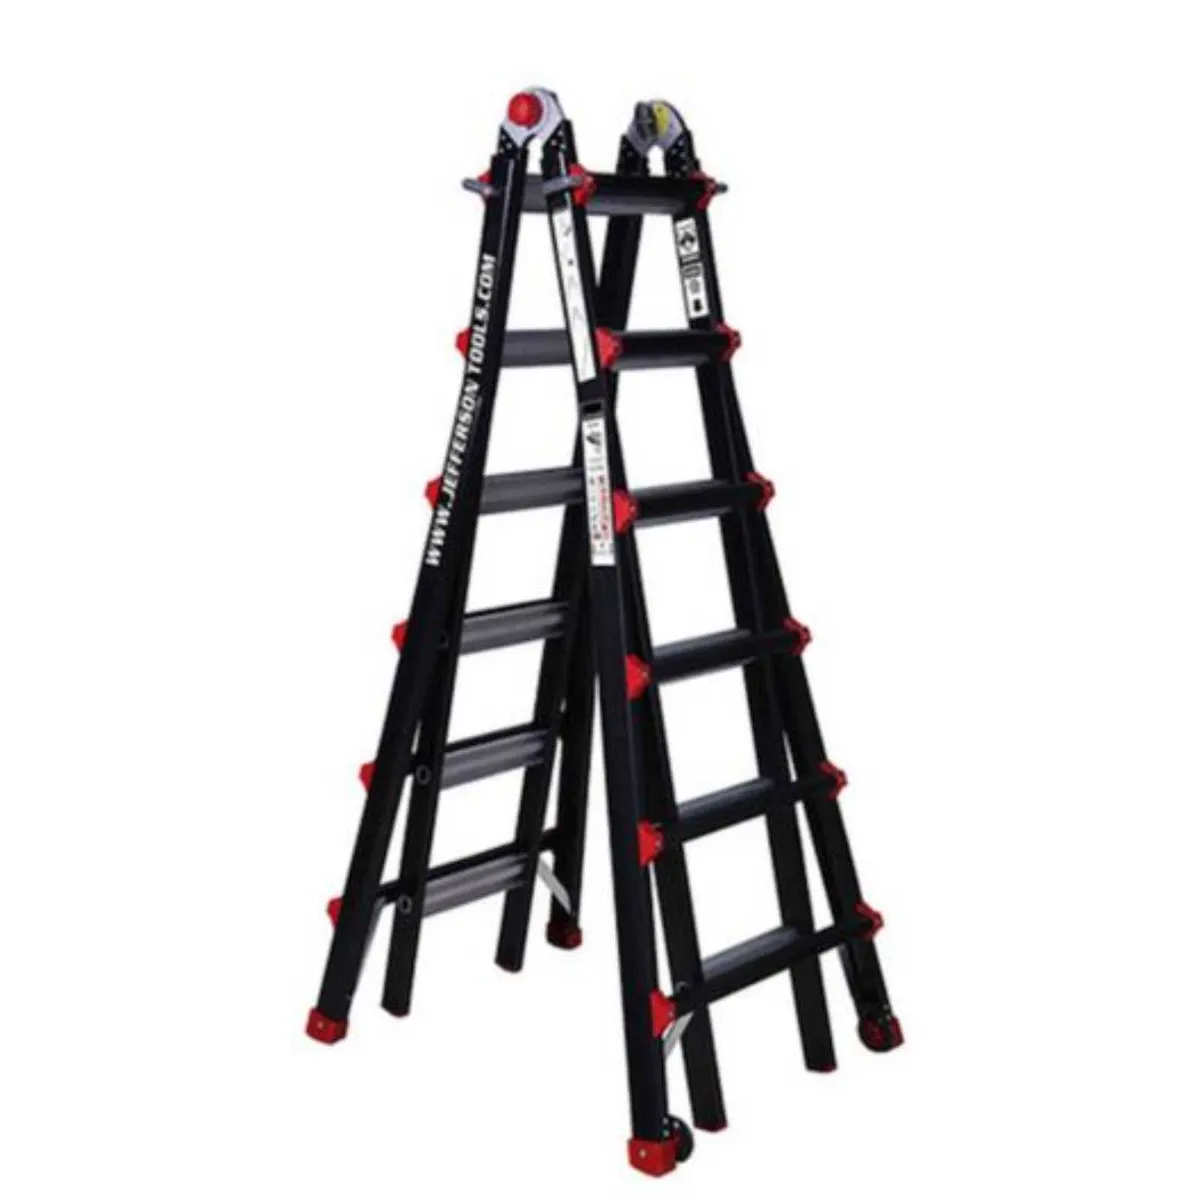 Jefferson professional multi purpose ladders - Image 1